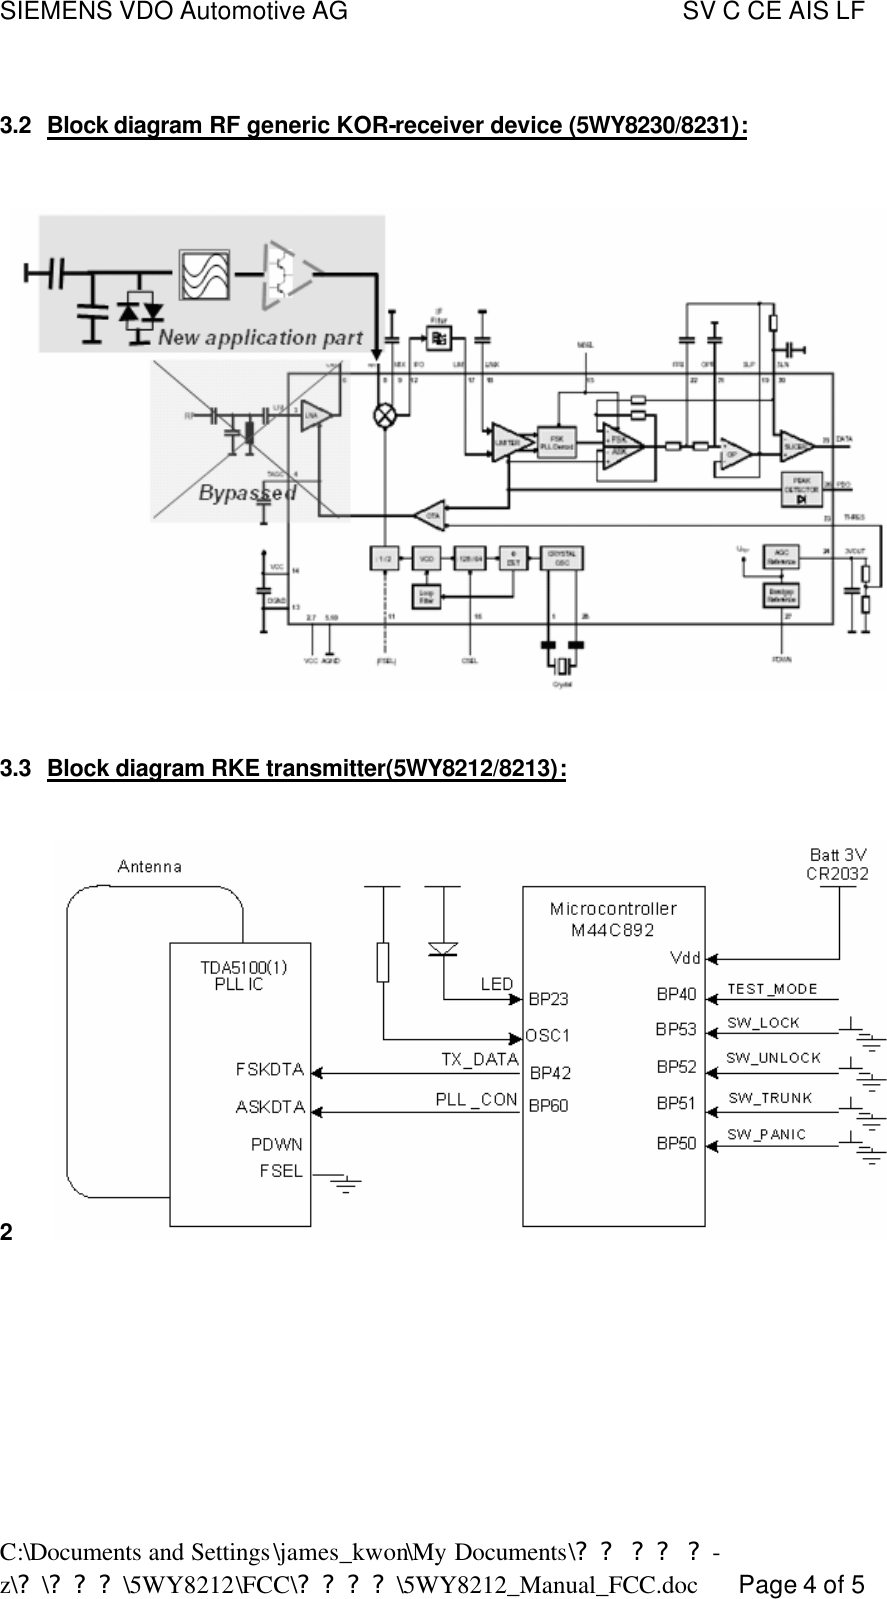 SIEMENS VDO Automotive AG    SV C CE AIS LF C:\Documents and Settings\james_kwon\My Documents\?? ?? ?-z\?\???\5WY8212\FCC\????\5WY8212_Manual_FCC.doc      Page 4 of 5  3.2 Block diagram RF generic KOR-receiver device (5WY8230/8231):                   3.3 Block diagram RKE transmitter(5WY8212/8213):   2 